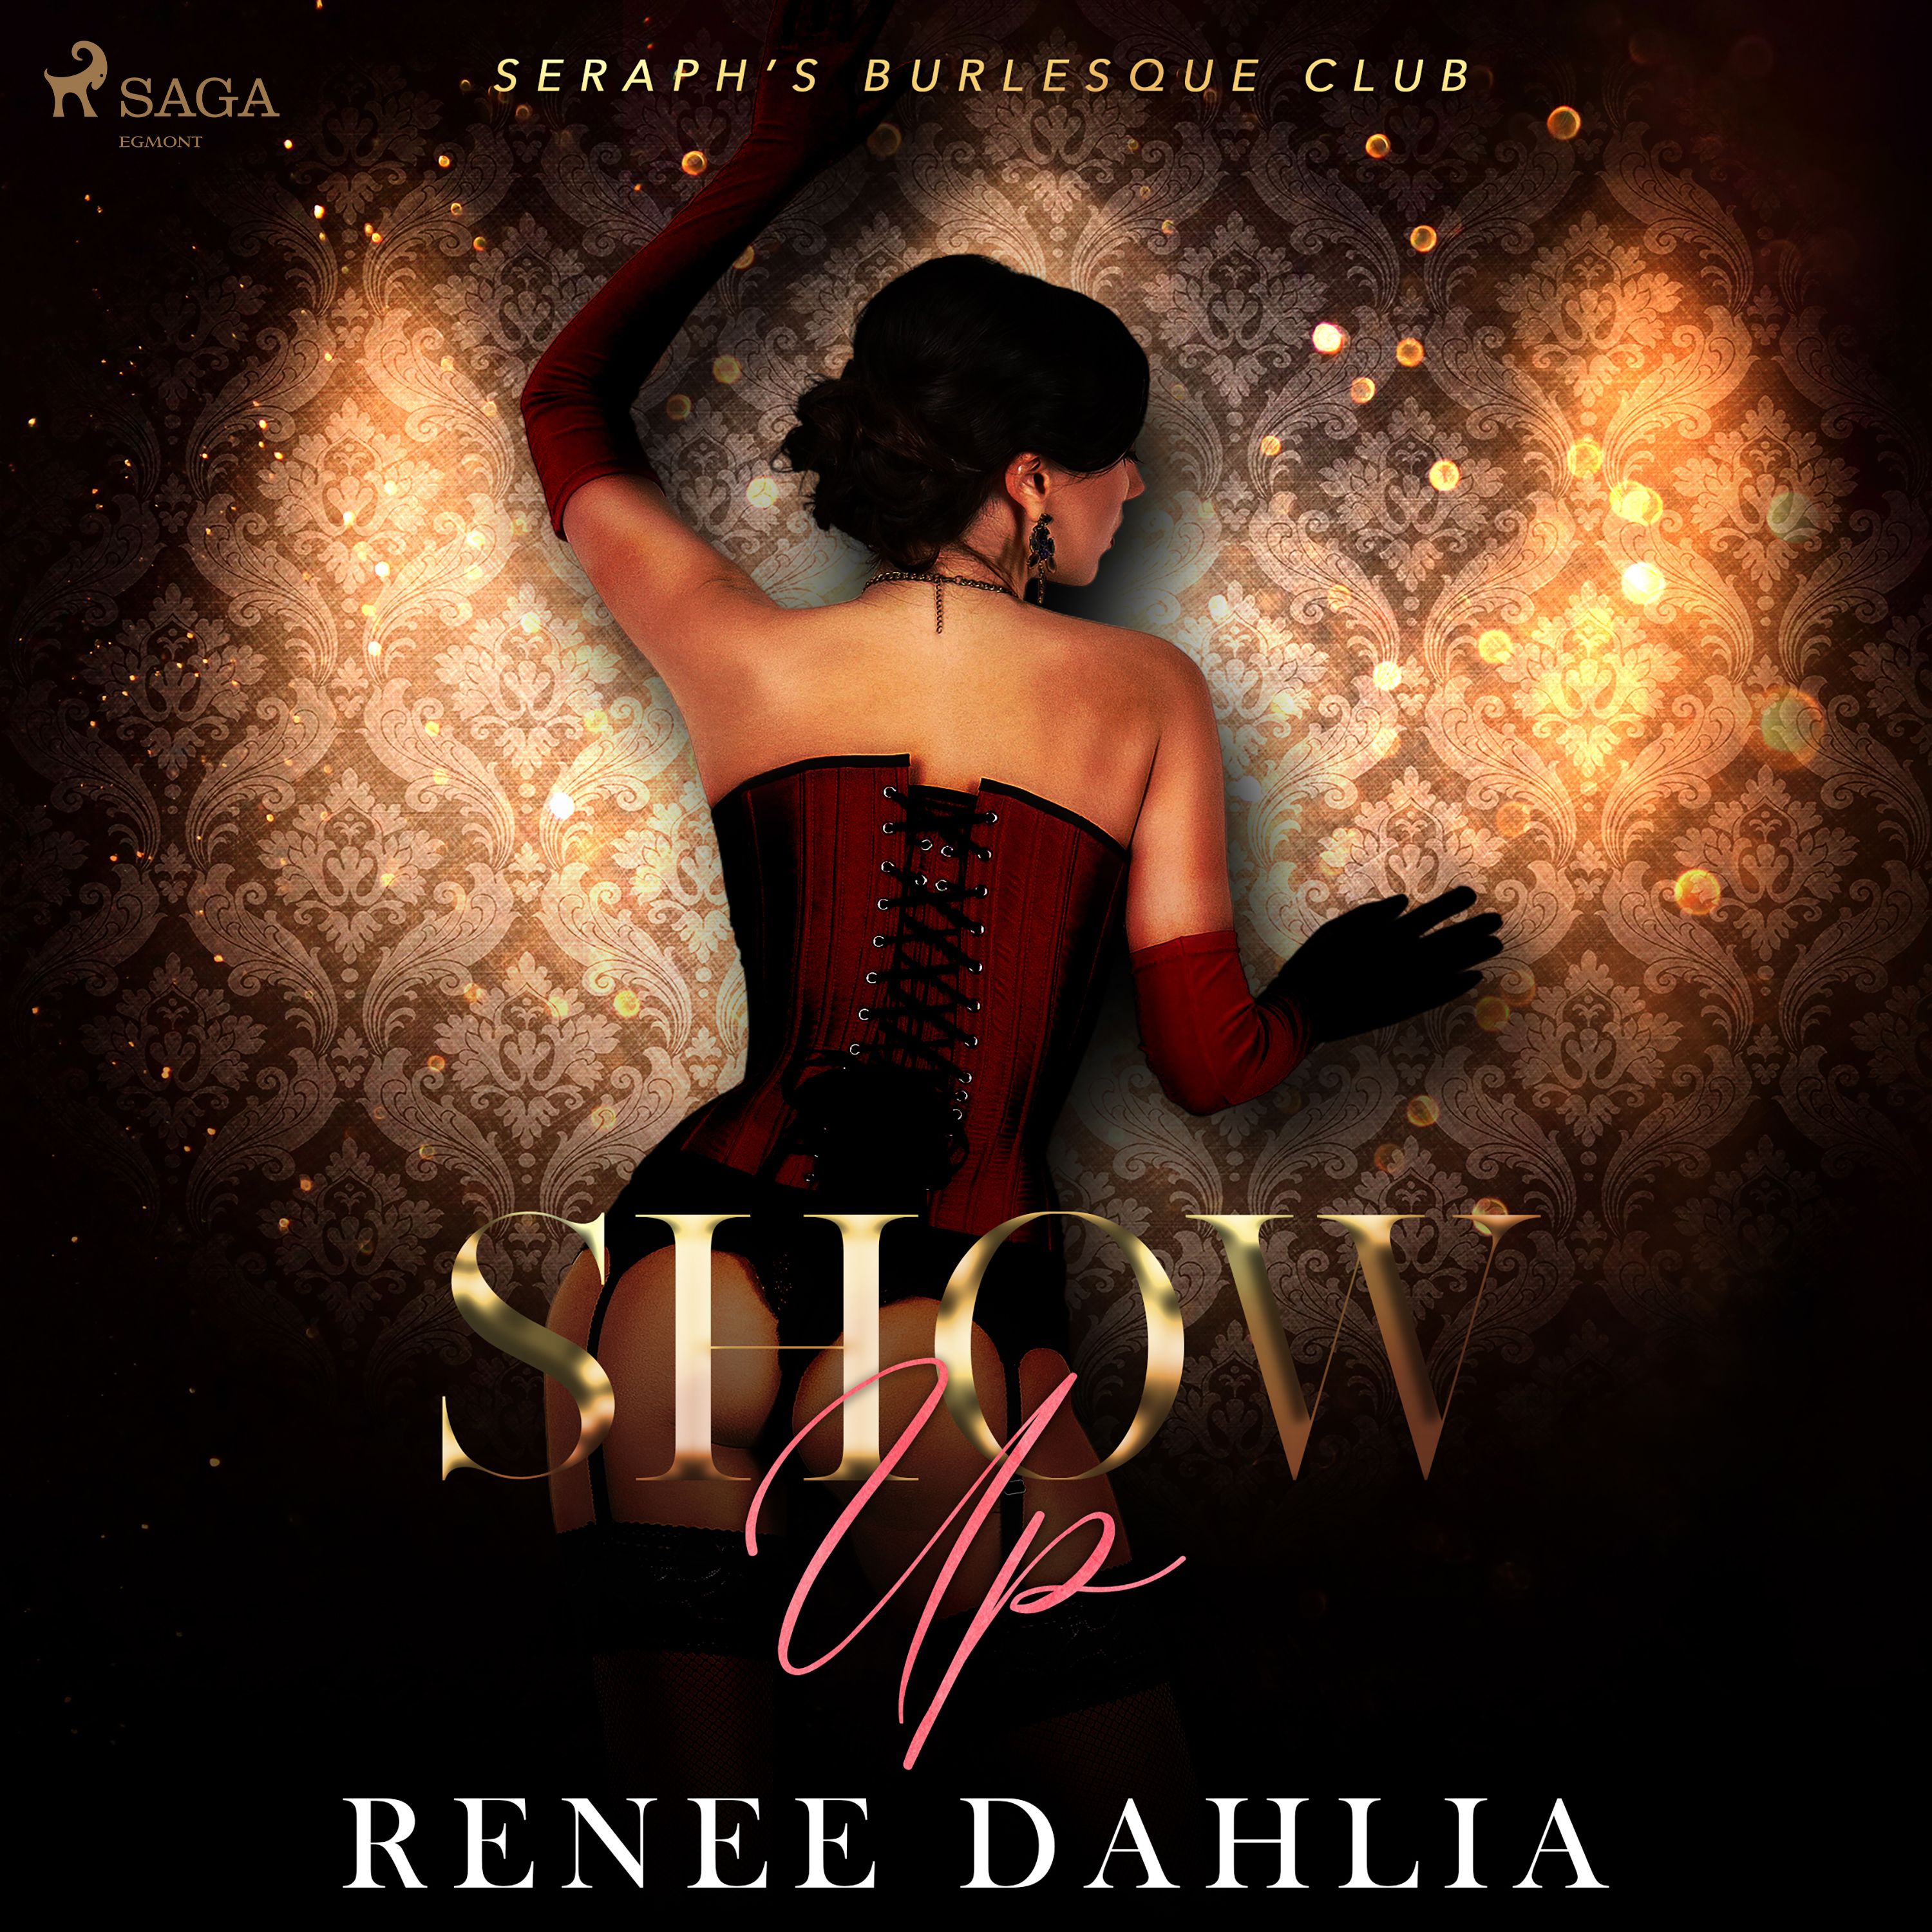 Show Up, audiobook by Renee Dahlia